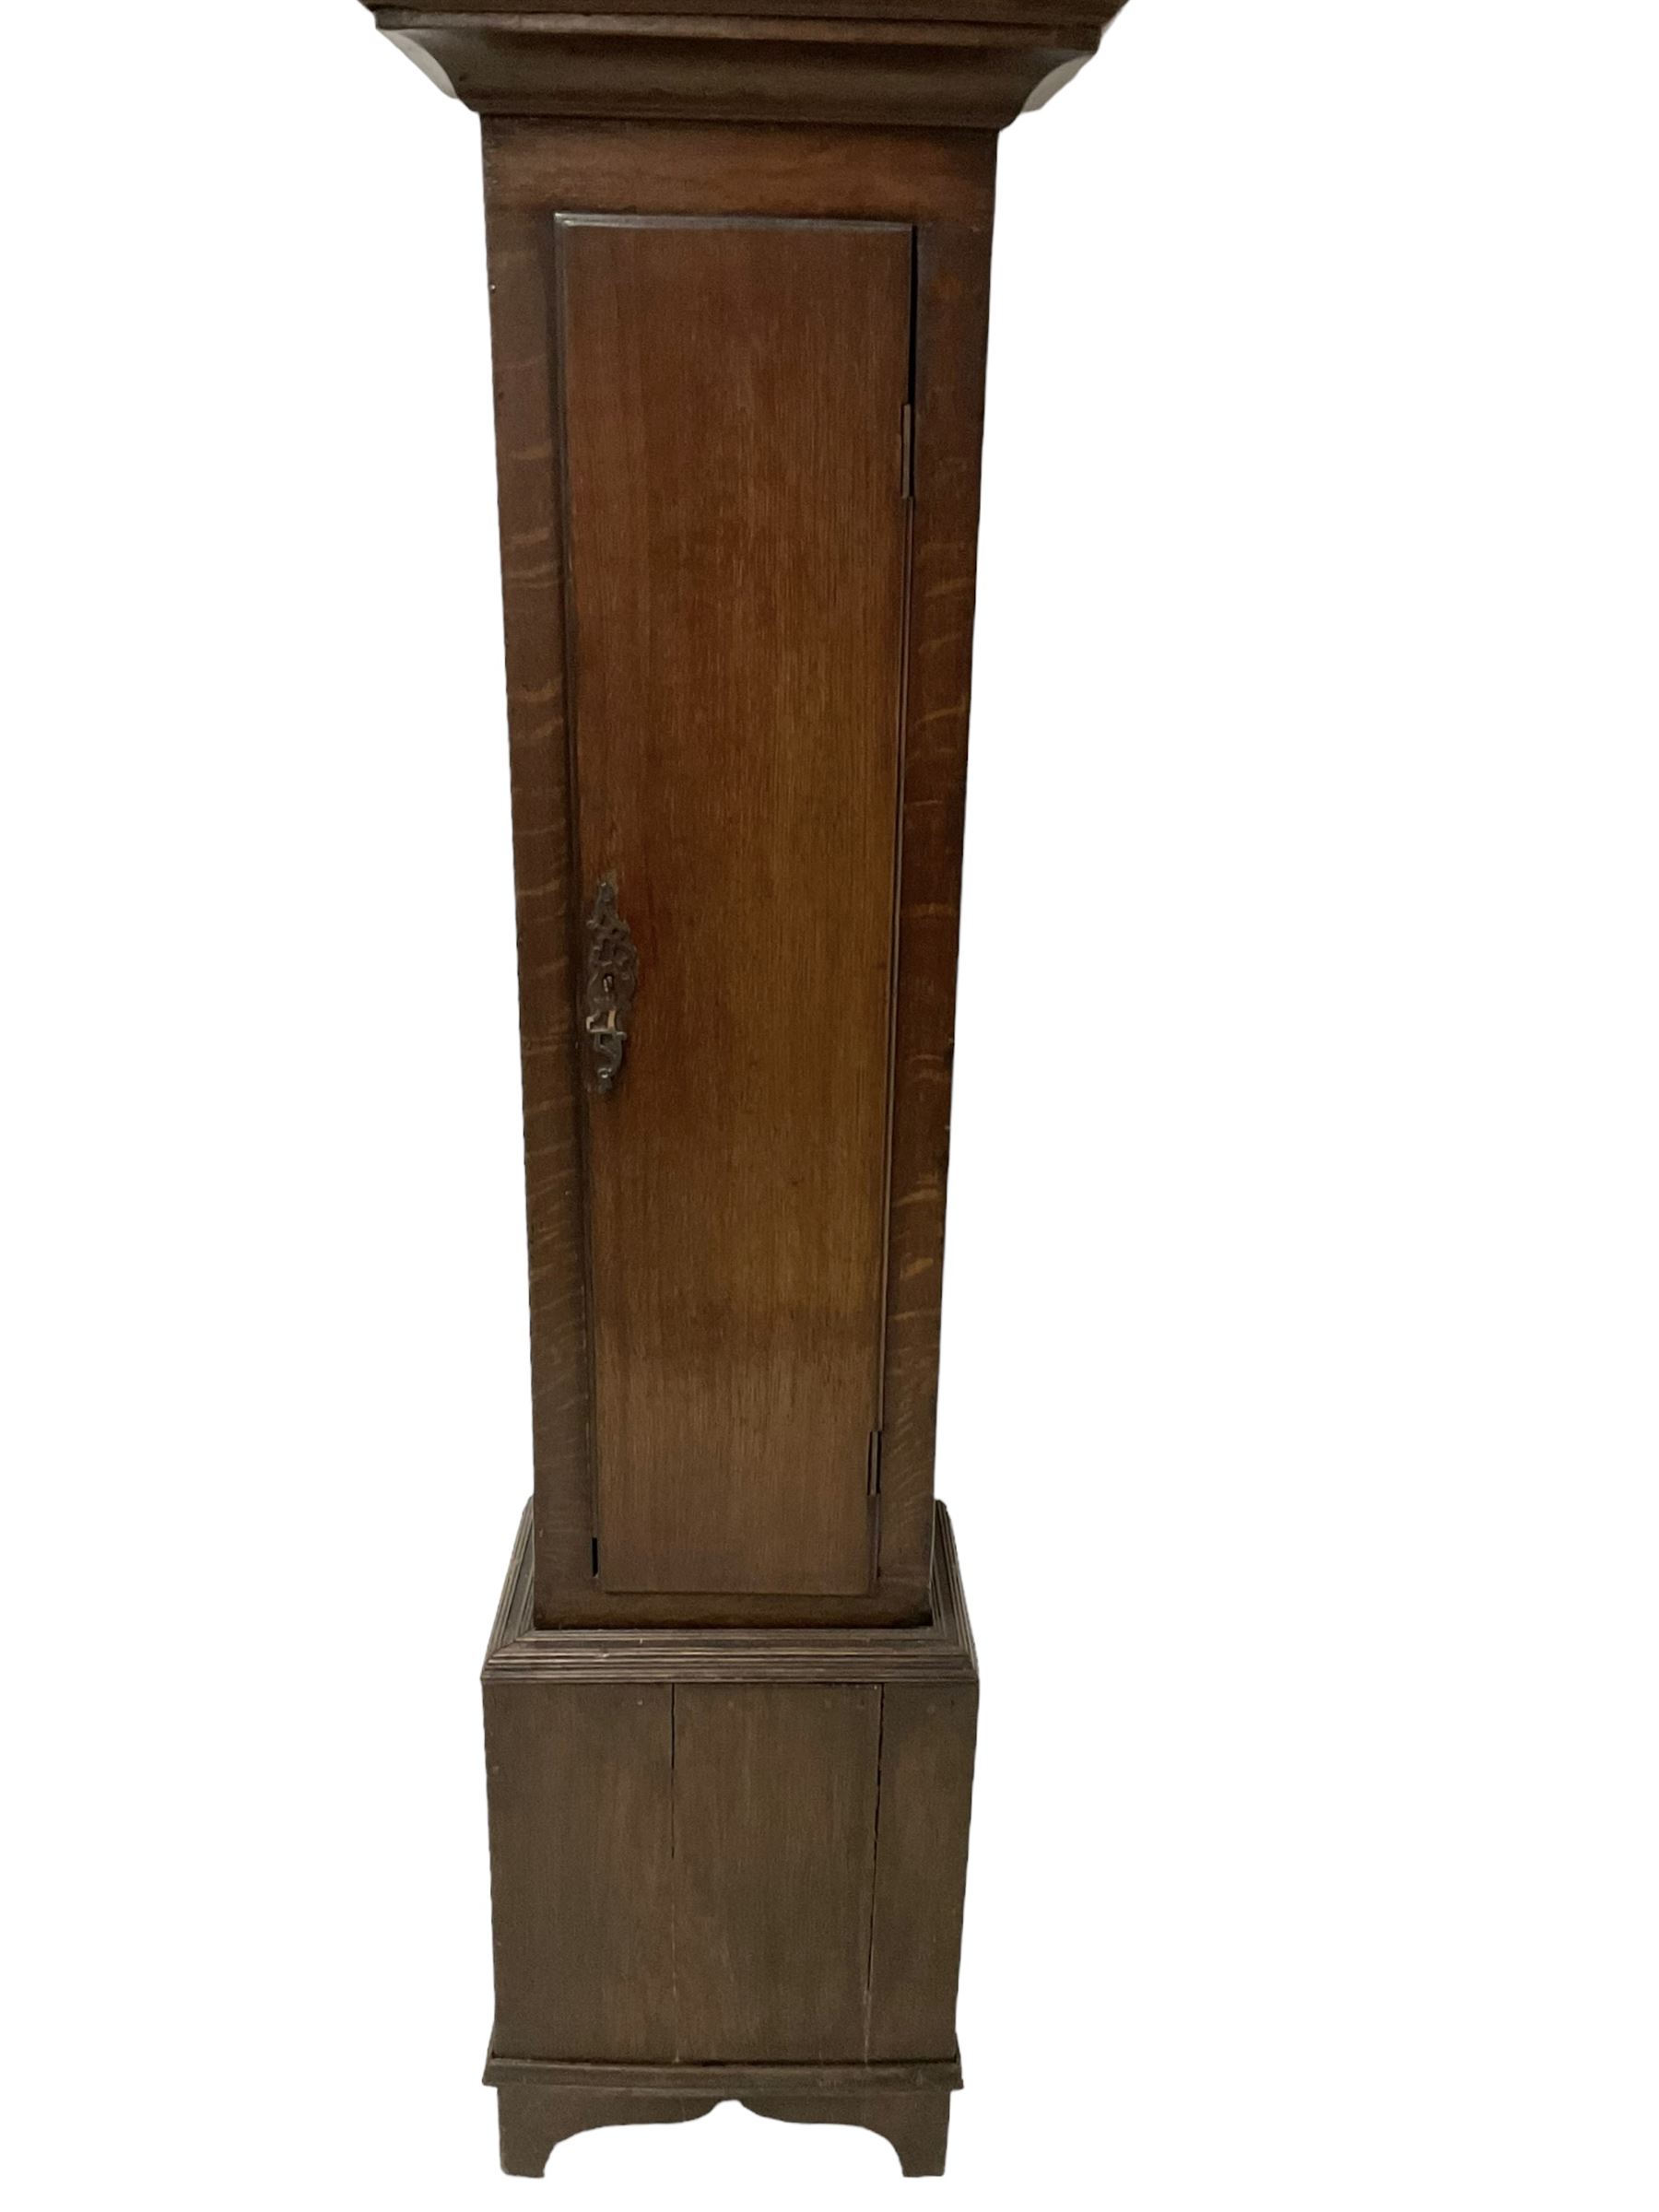 Robert Parkinson of Lancaster - an early George II oak cased 30 hr longcase clock - Image 5 of 7